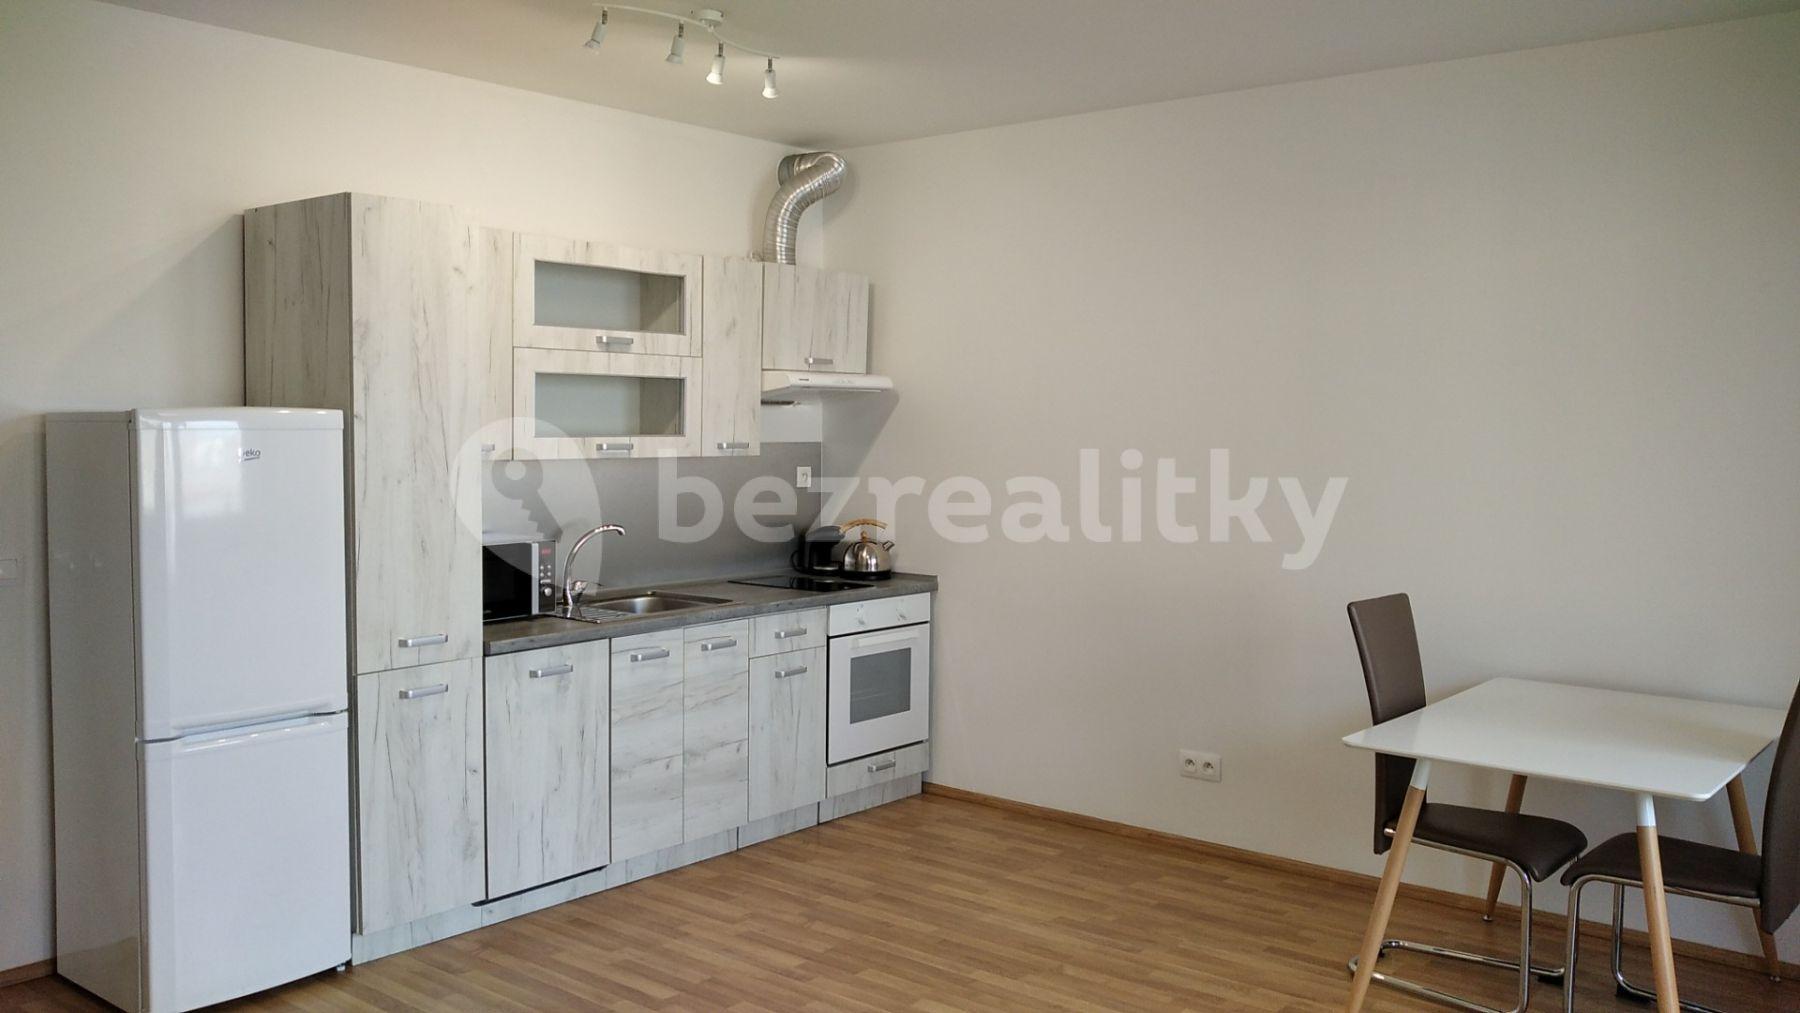 Studio flat to rent, 31 m², Škrábkových, Prague, Prague